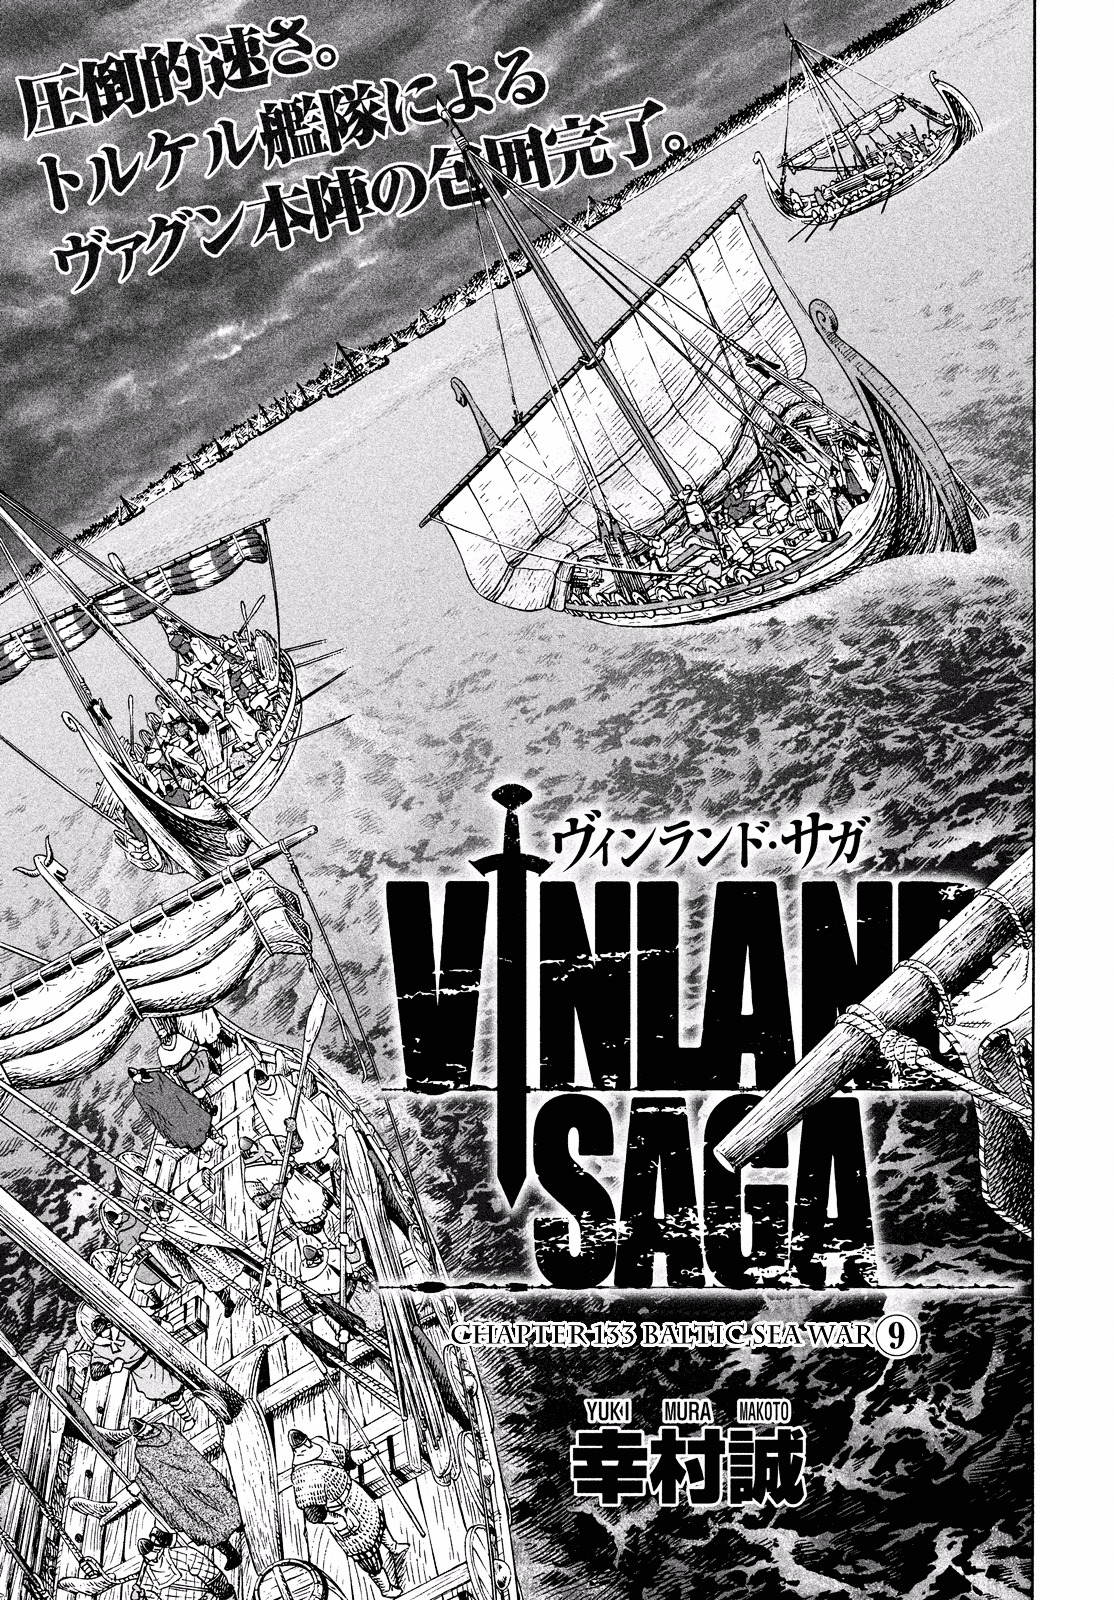 Vinland Saga Chapter 133 : Baltic Sea War (9) - Picture 1